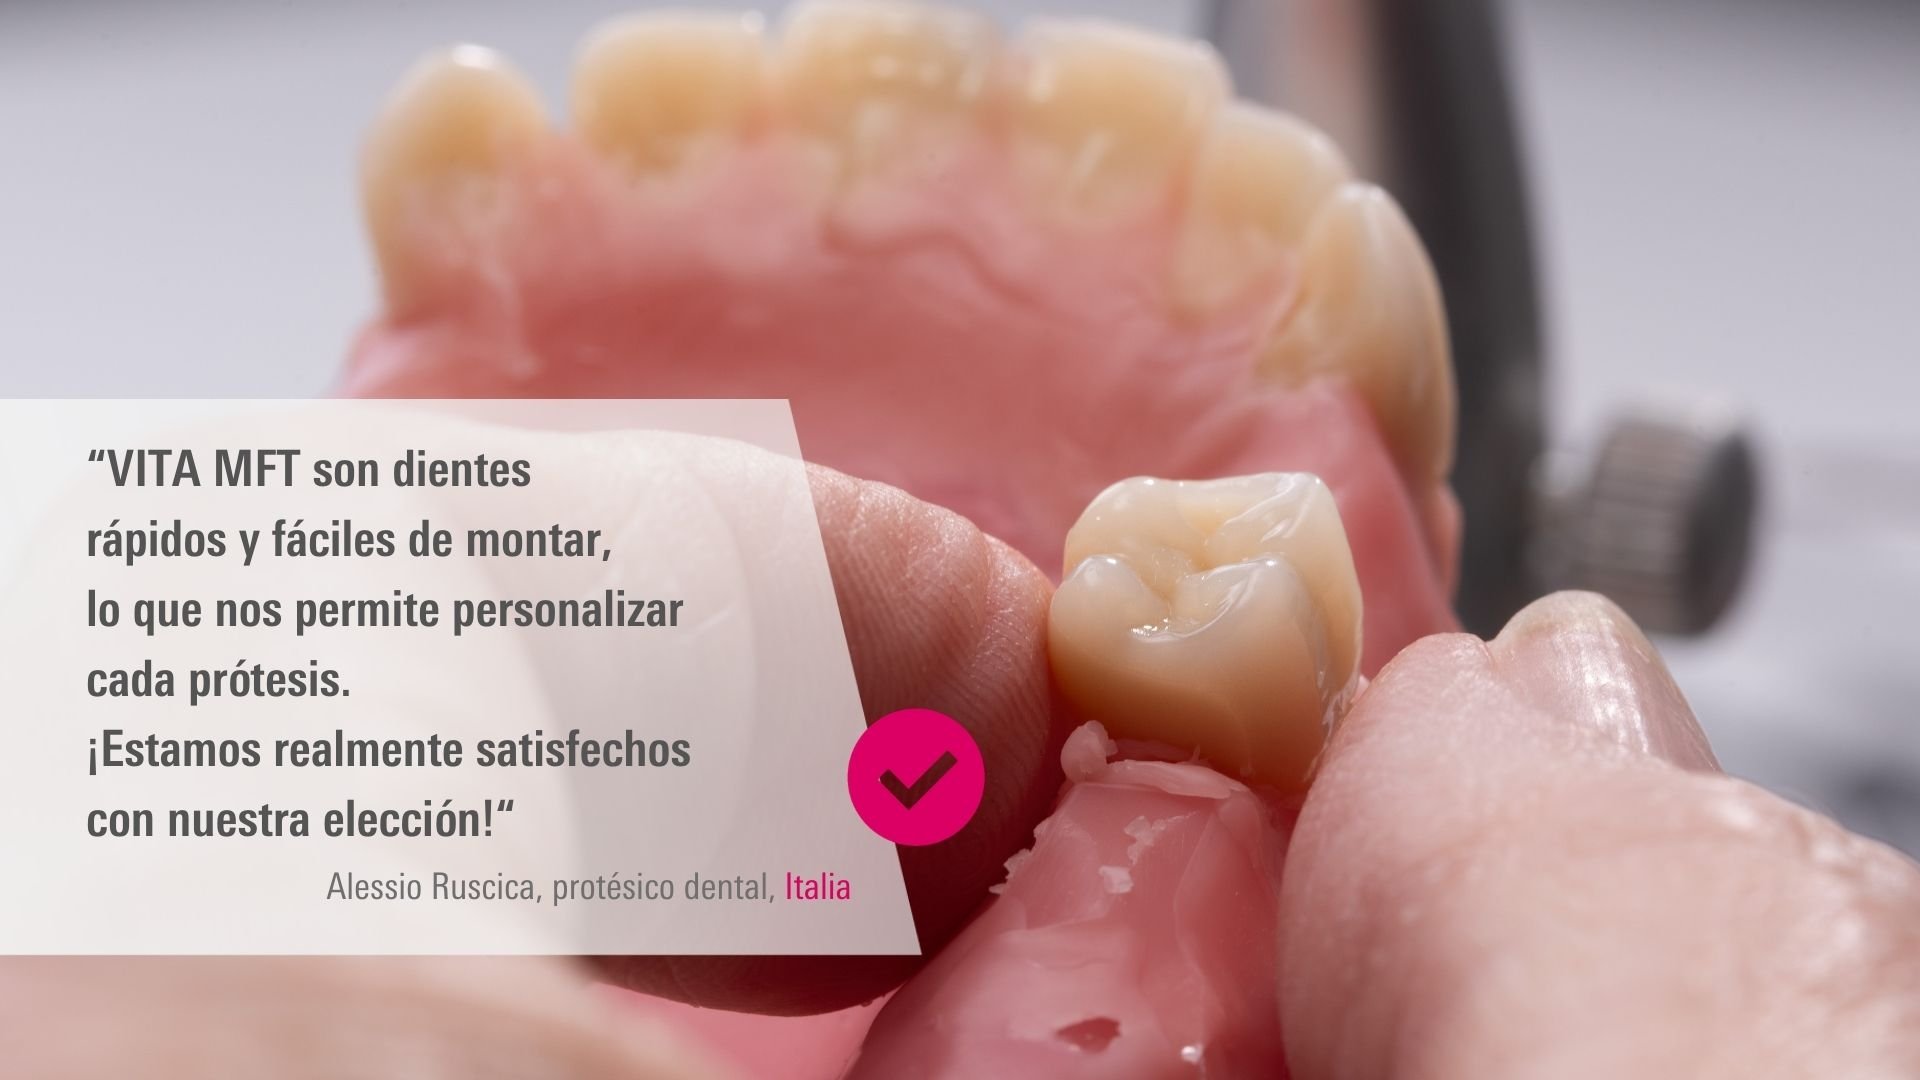 VITA MFT. Alessio Ruscica, protésico dental, Italia